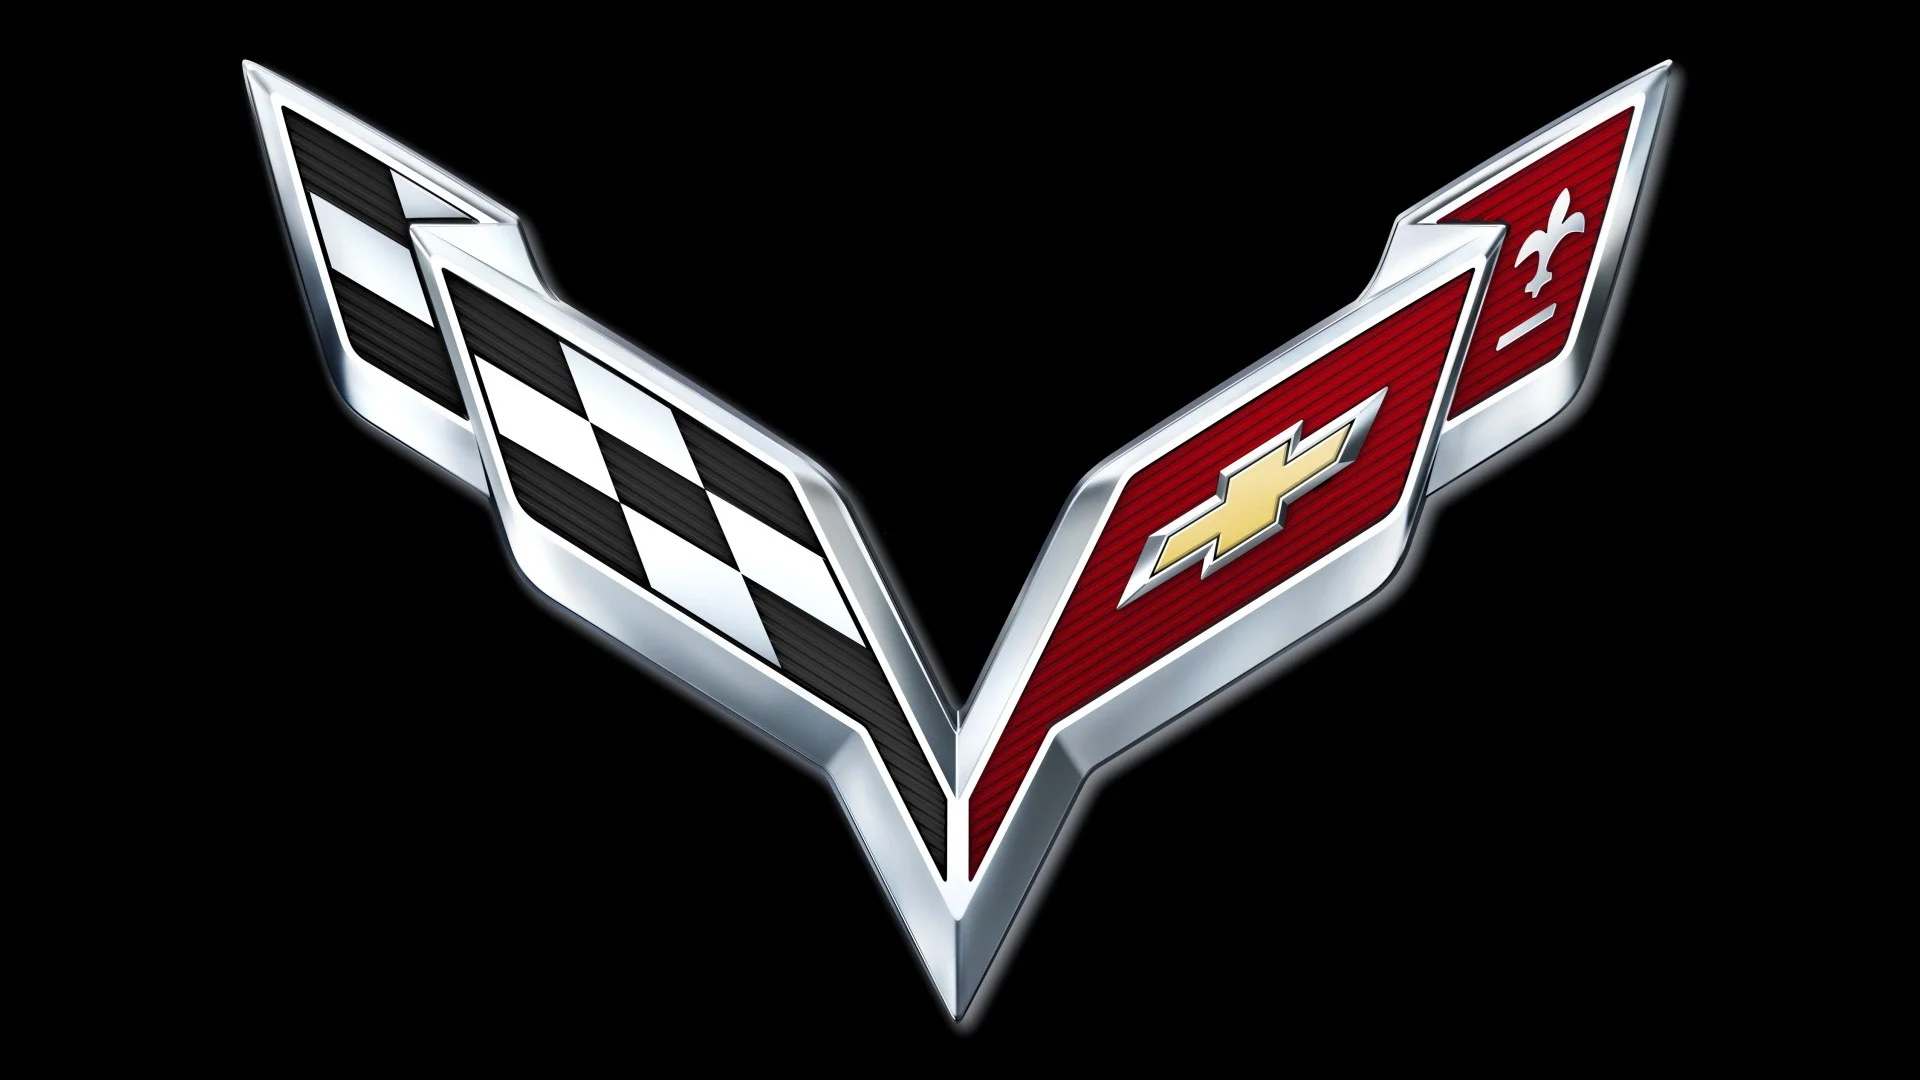 Corvette Logo Wallpapers 1080p with High Definition Wallpaper px 213.88 KB Logo Stingray 2014 C6